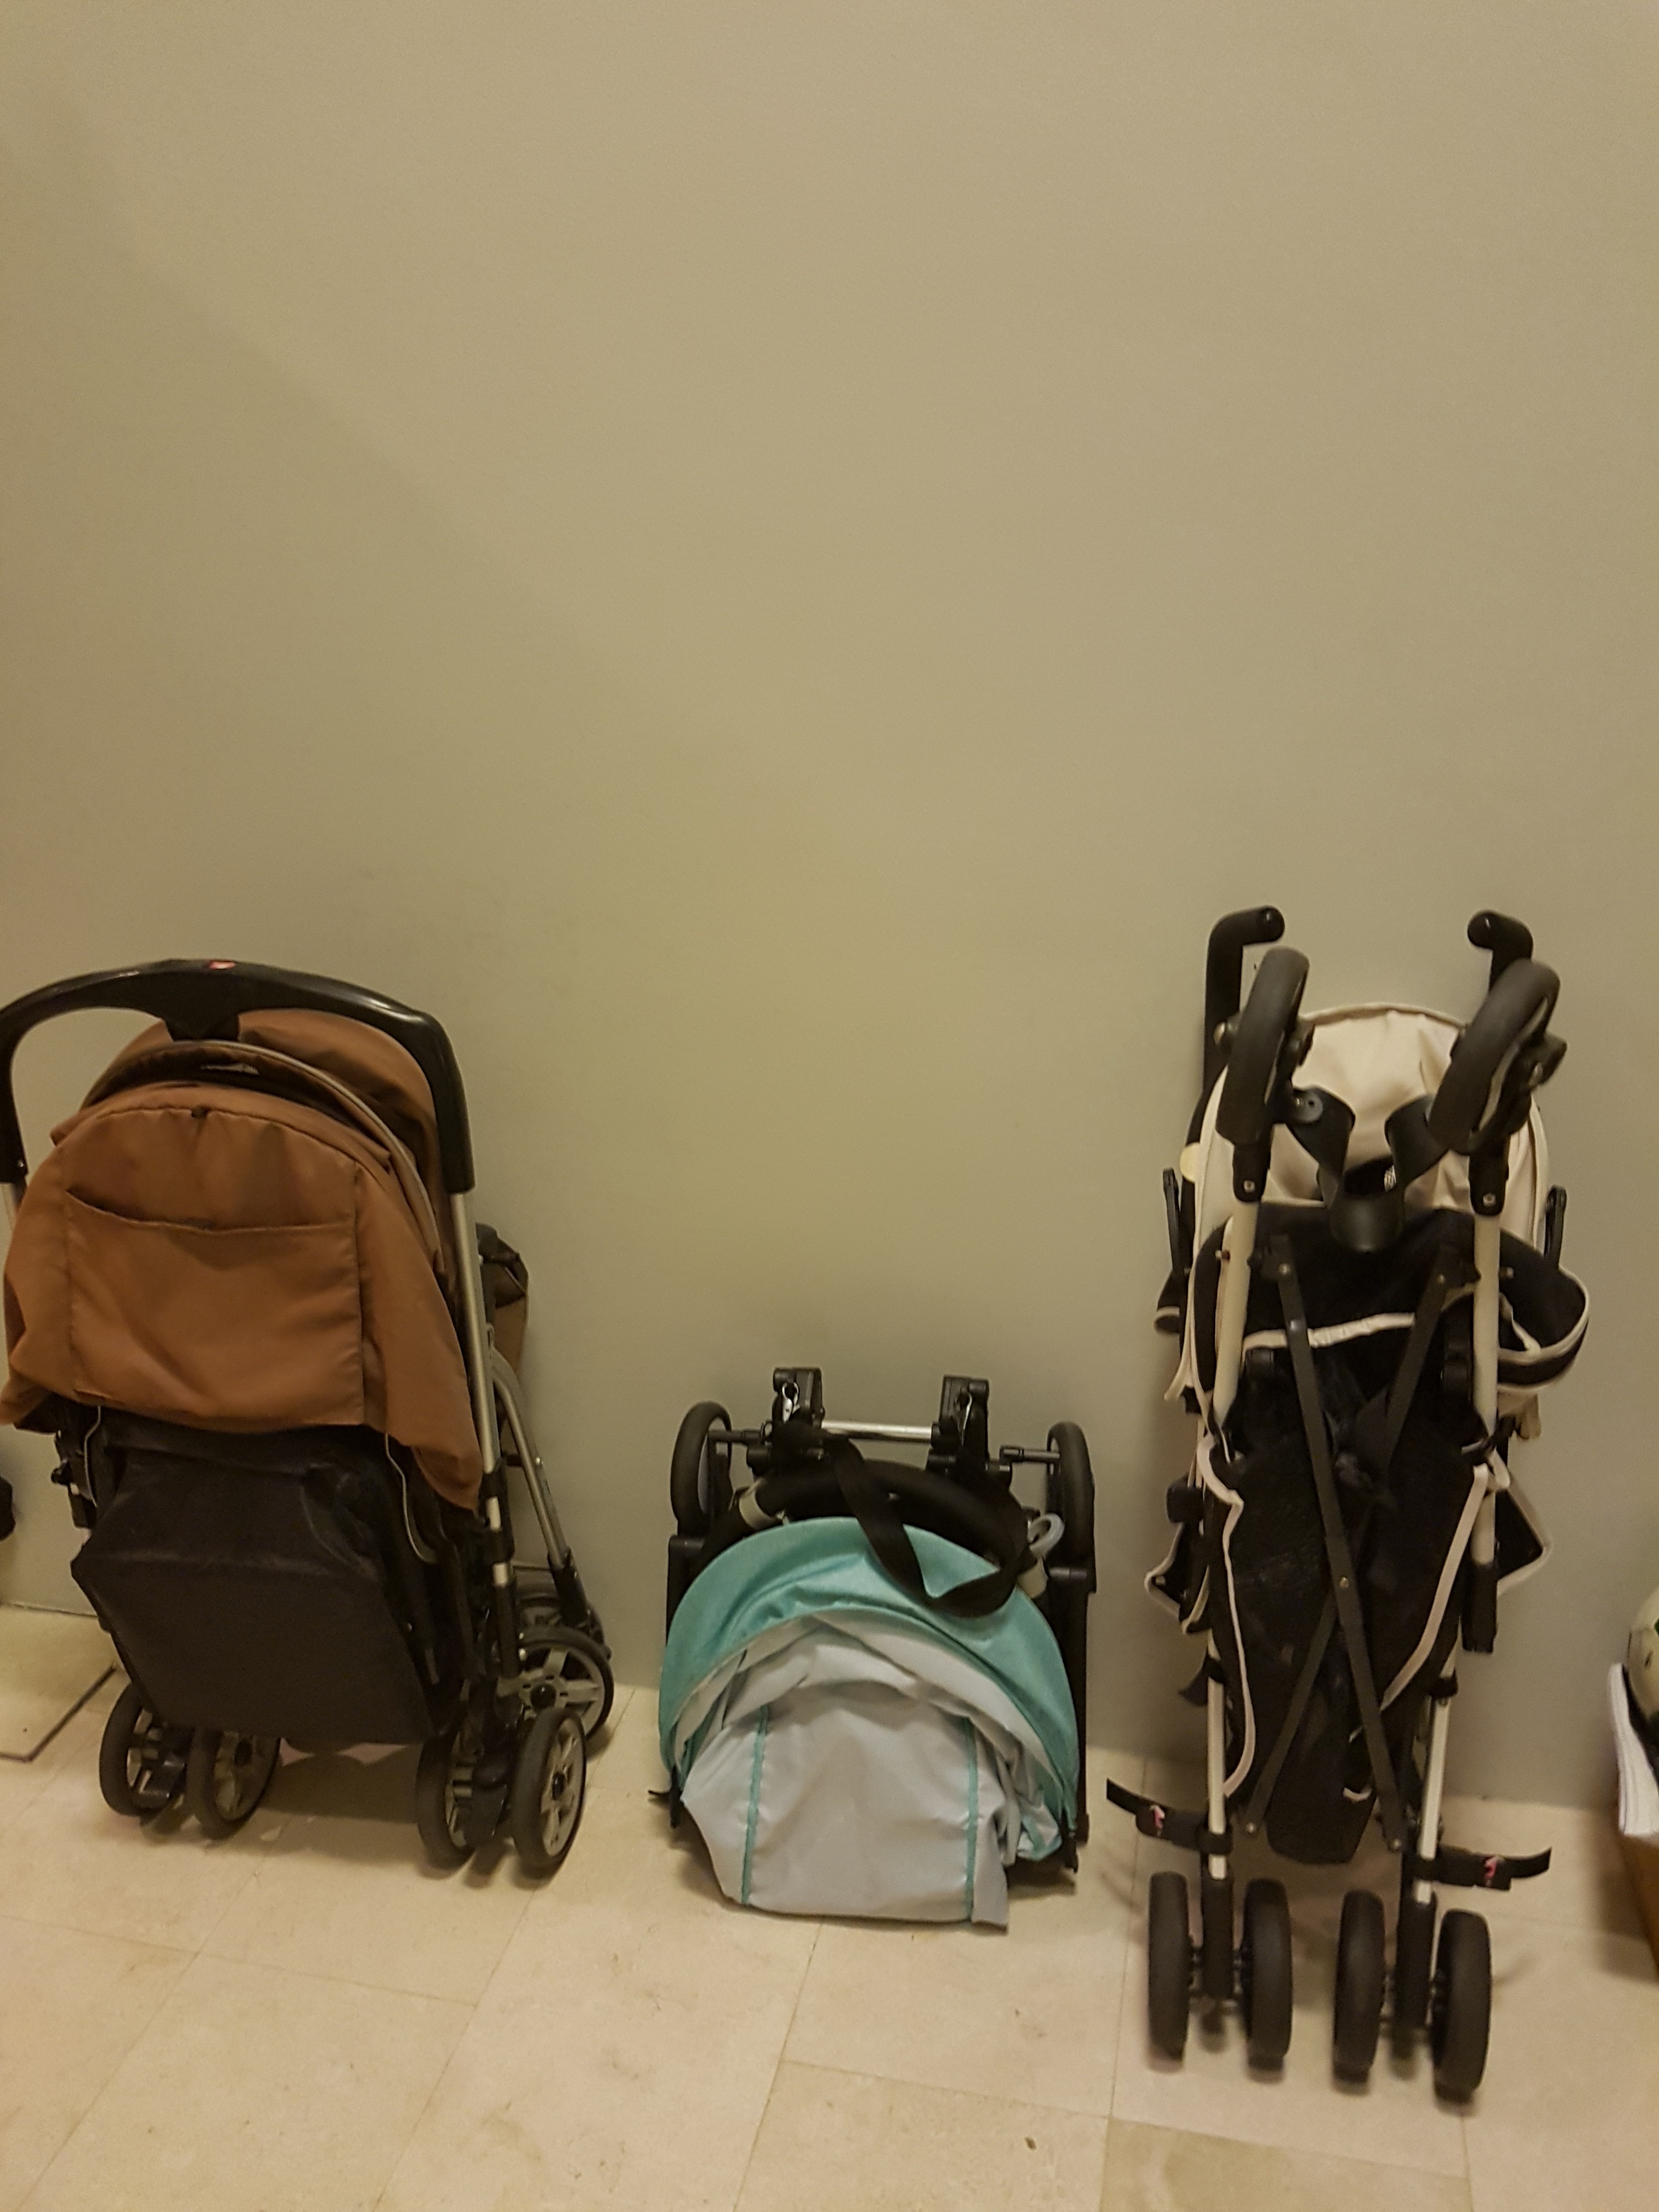 stroller newborn cabin size